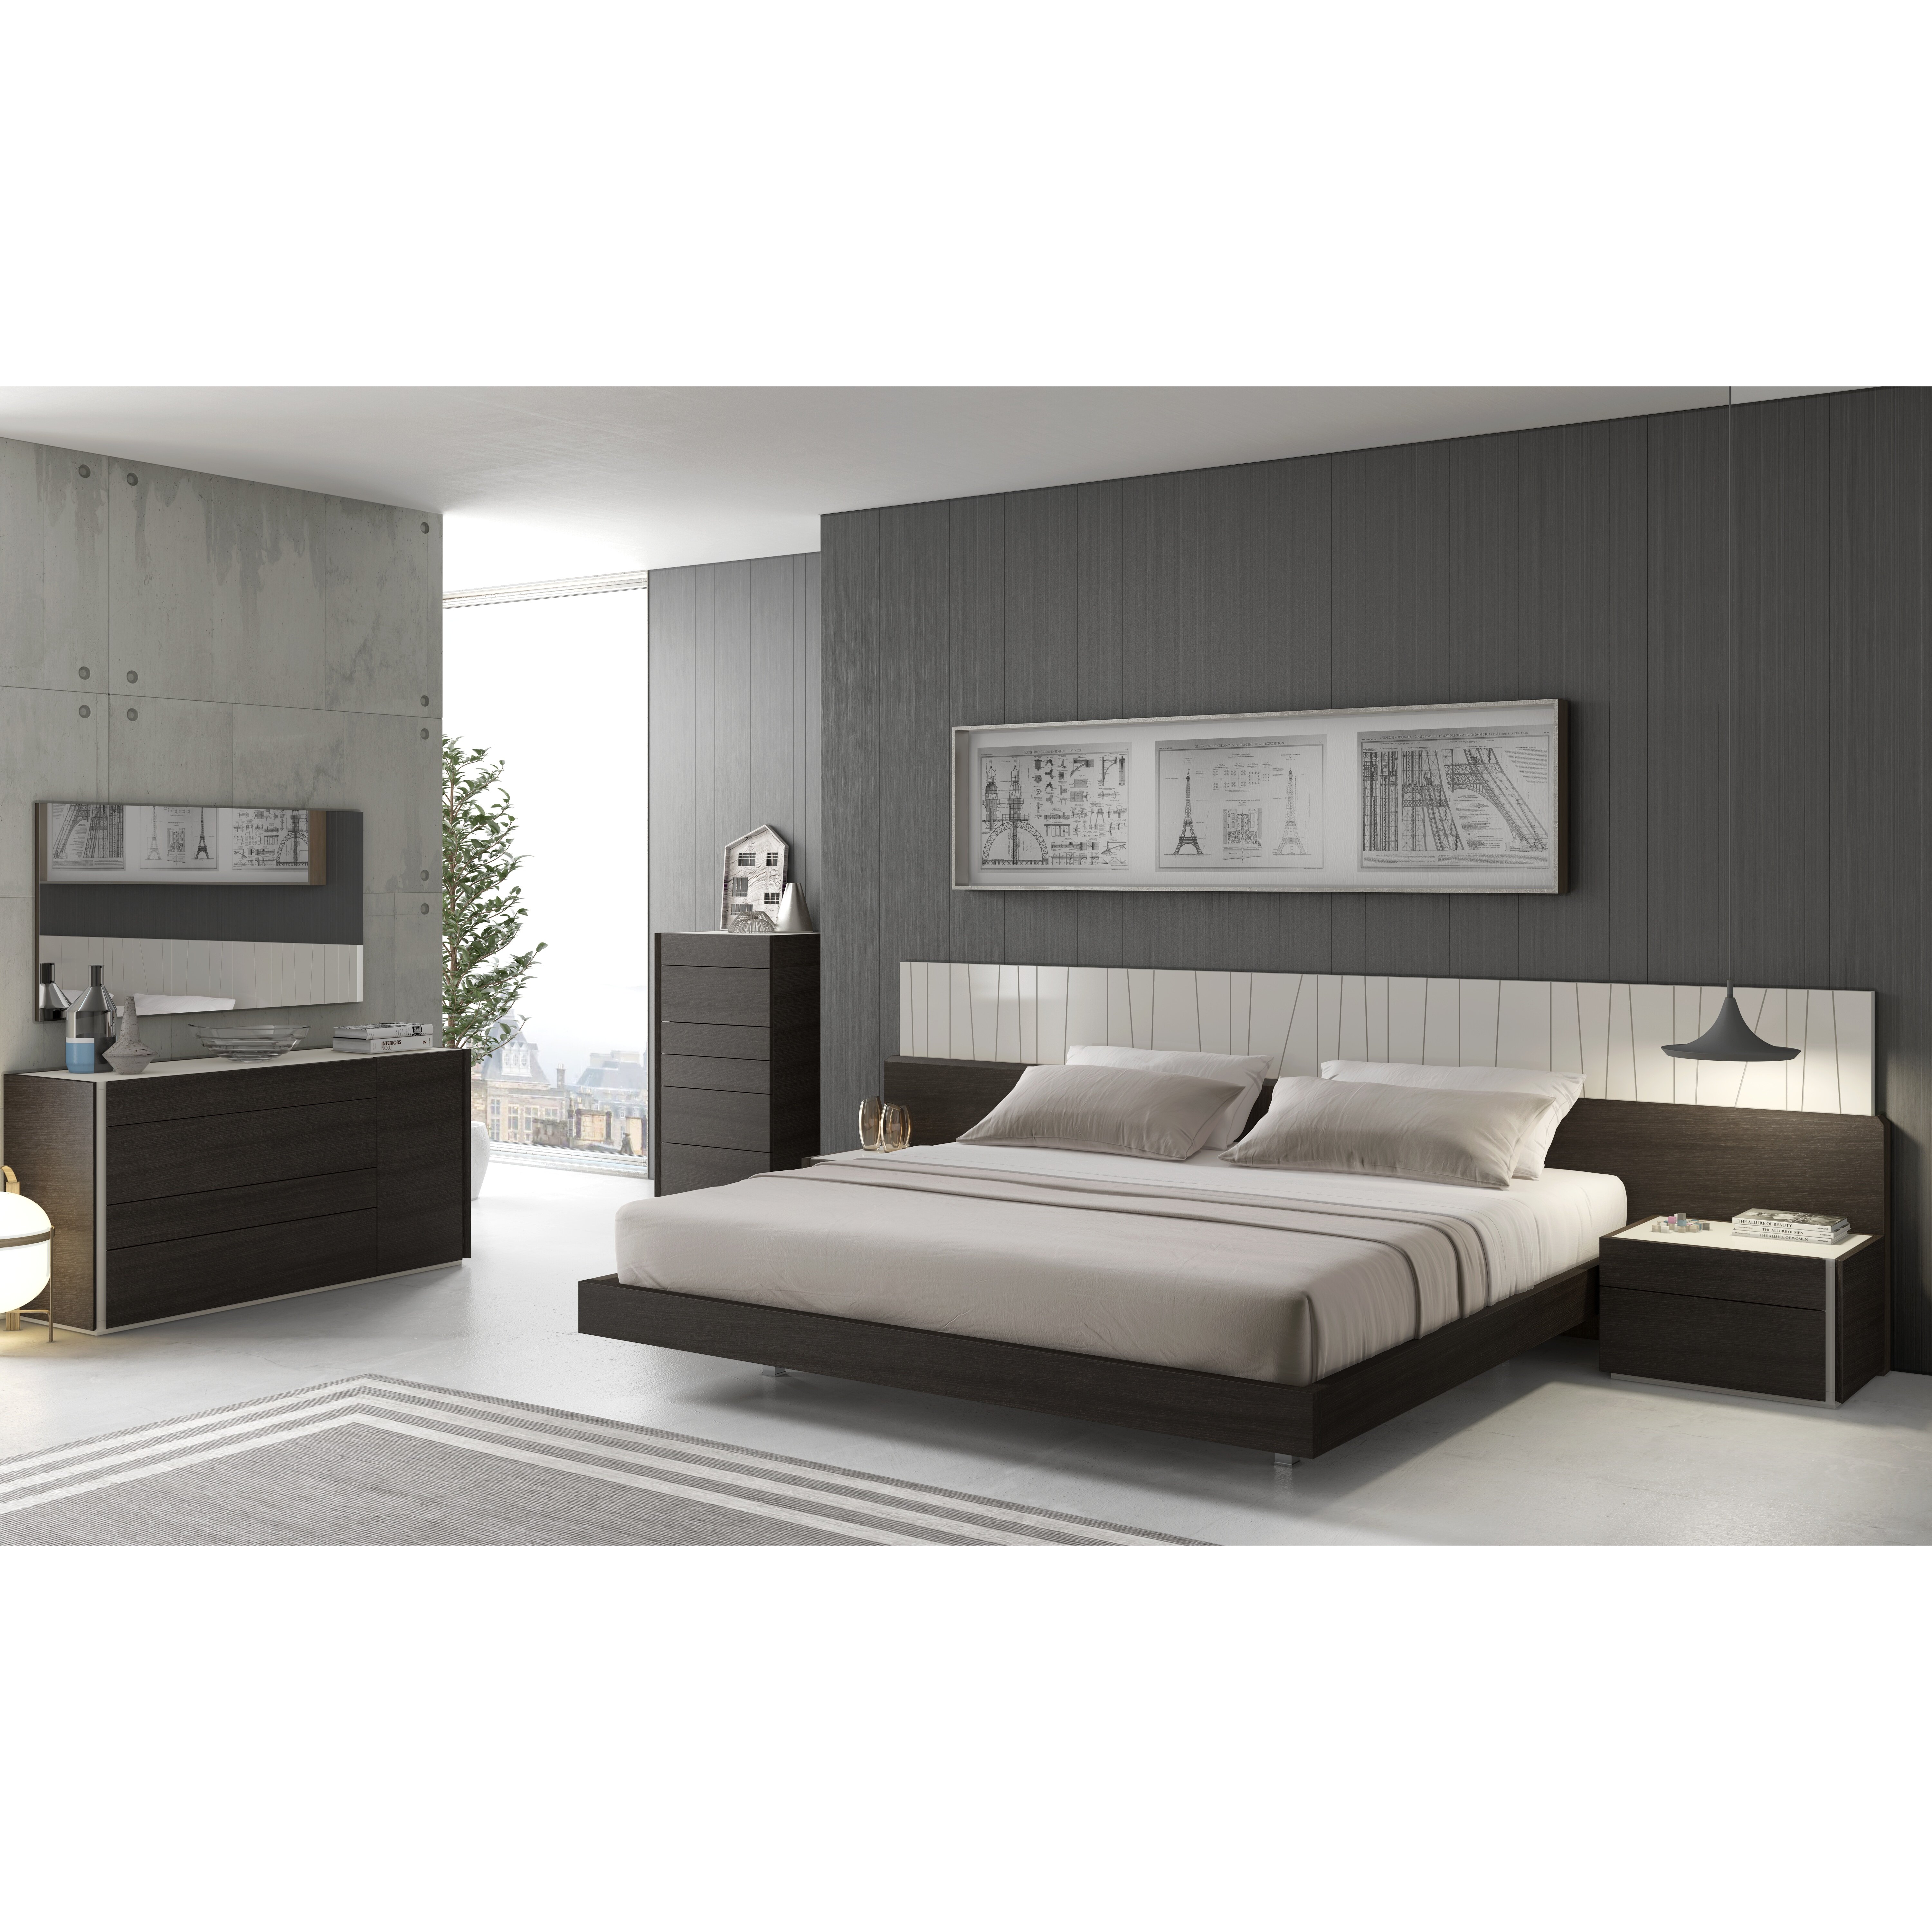 Contemporary Bedroom Set Home Design Ideas and